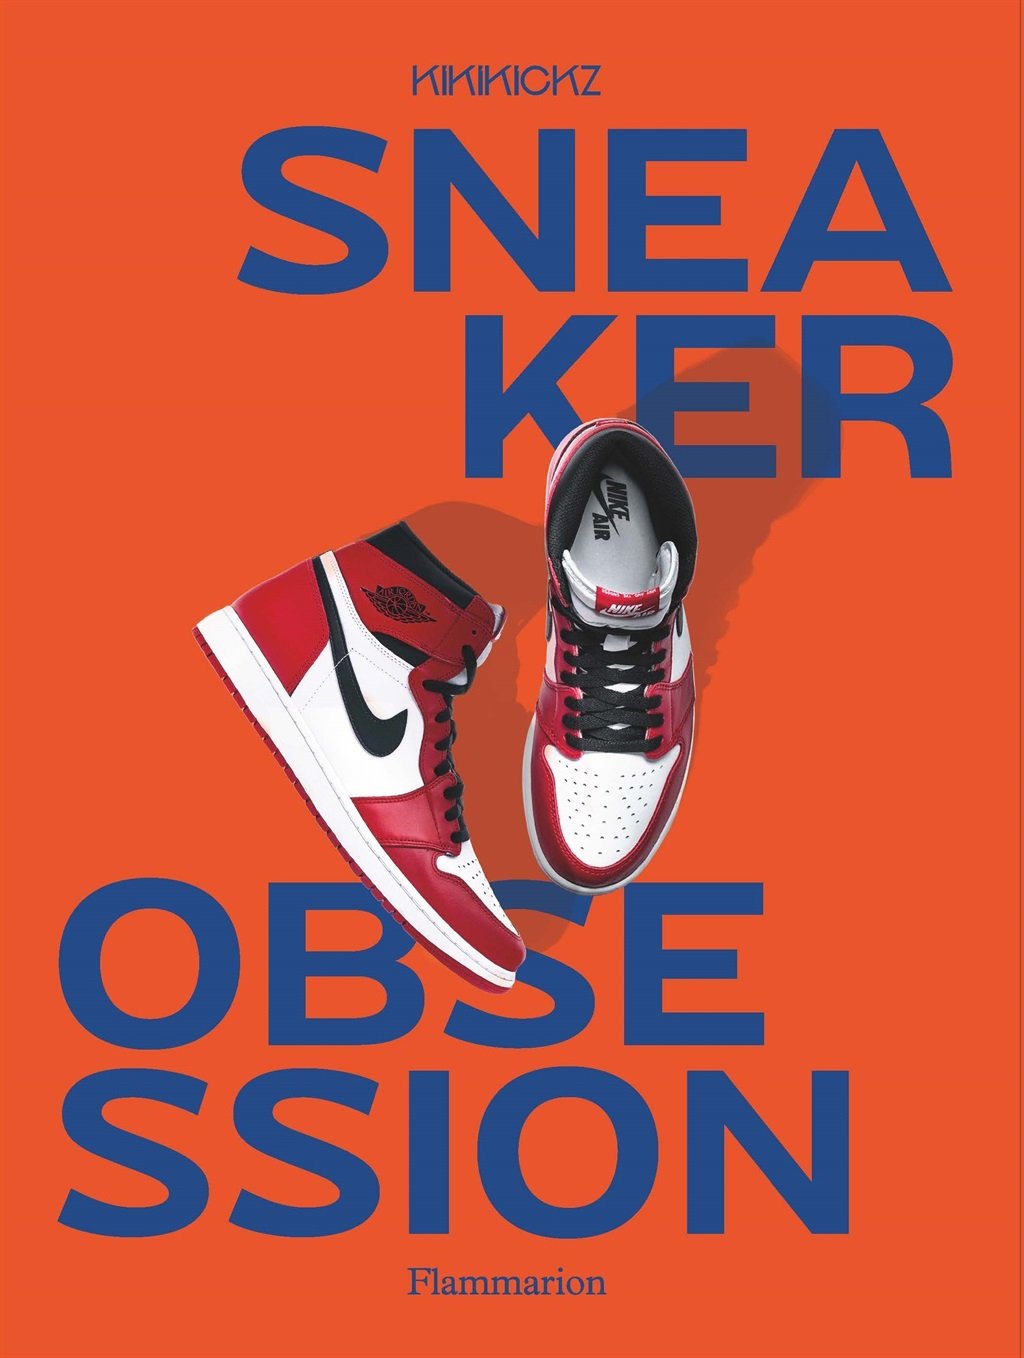 Sneaker Obsession by Alexandre Pauwels.